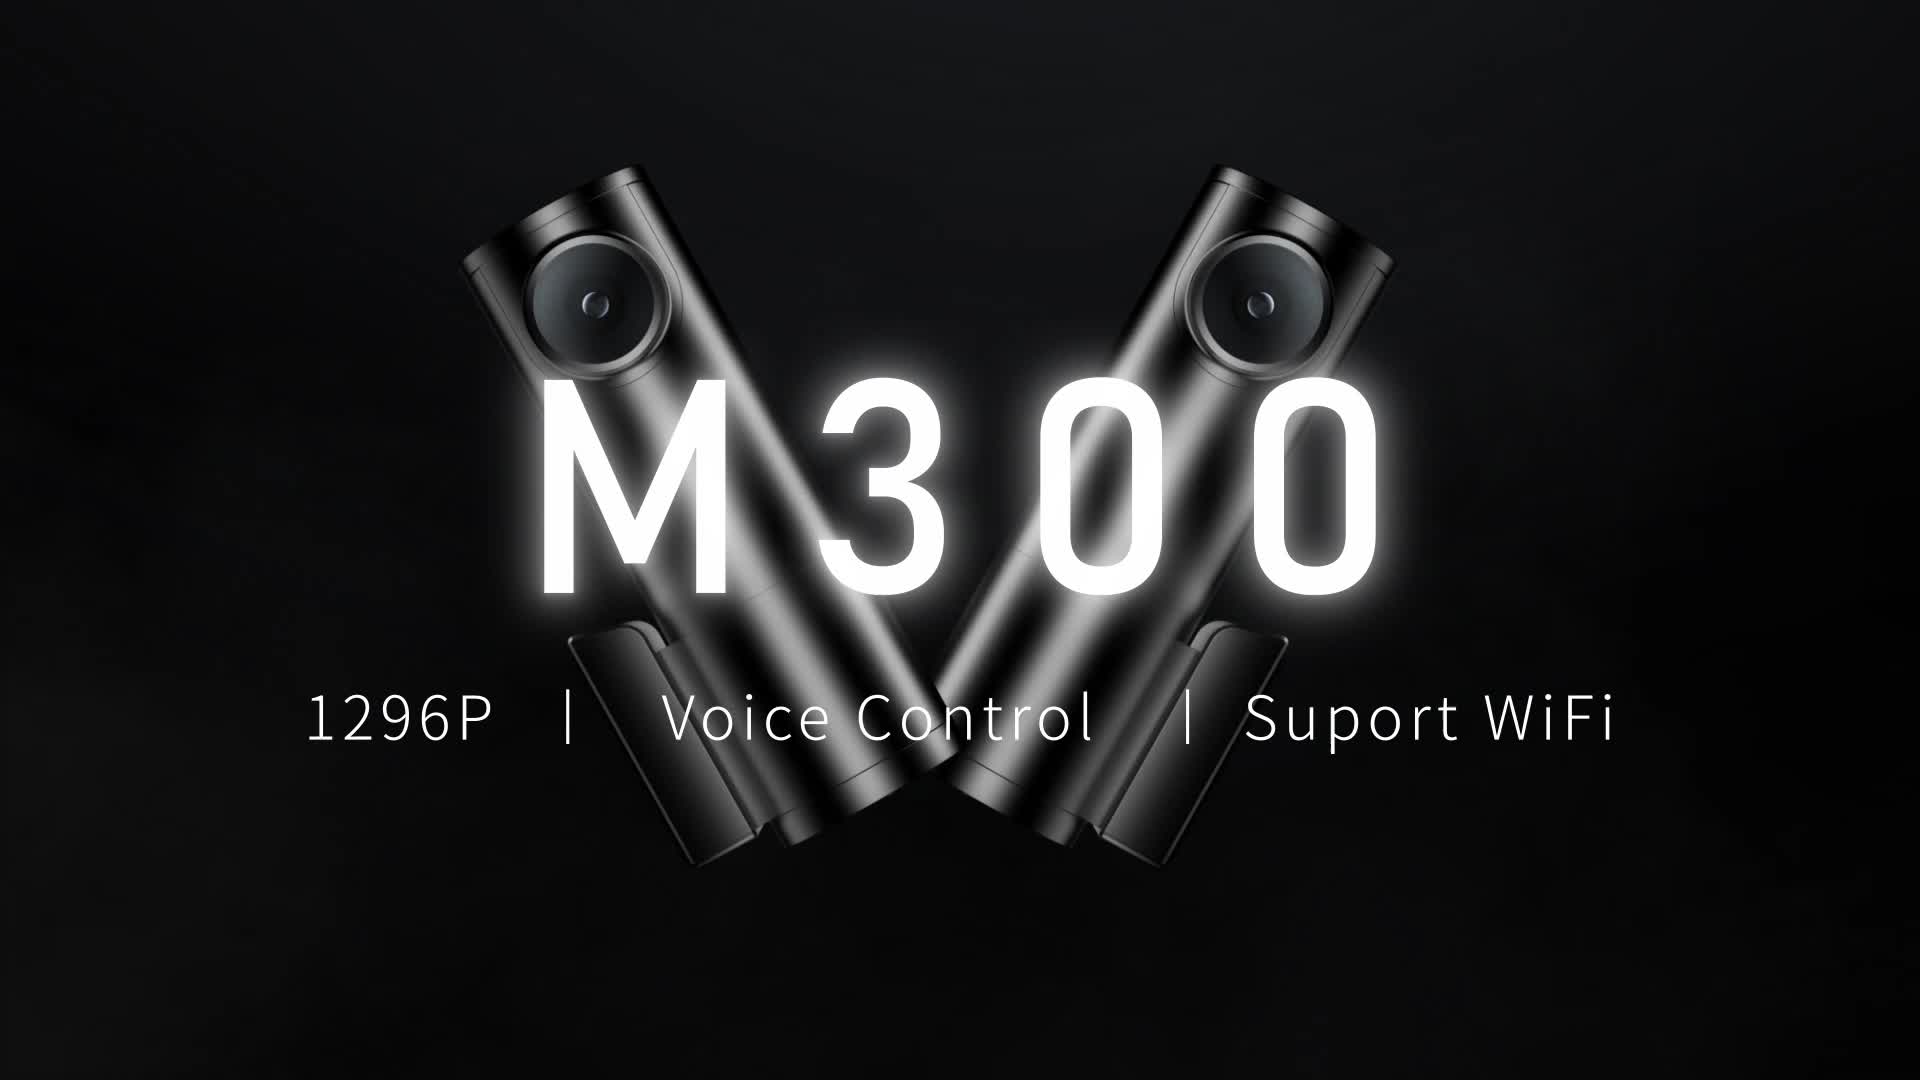 M300 FHD Smart Voice Control Dash Cam – AZDOME Official Stores